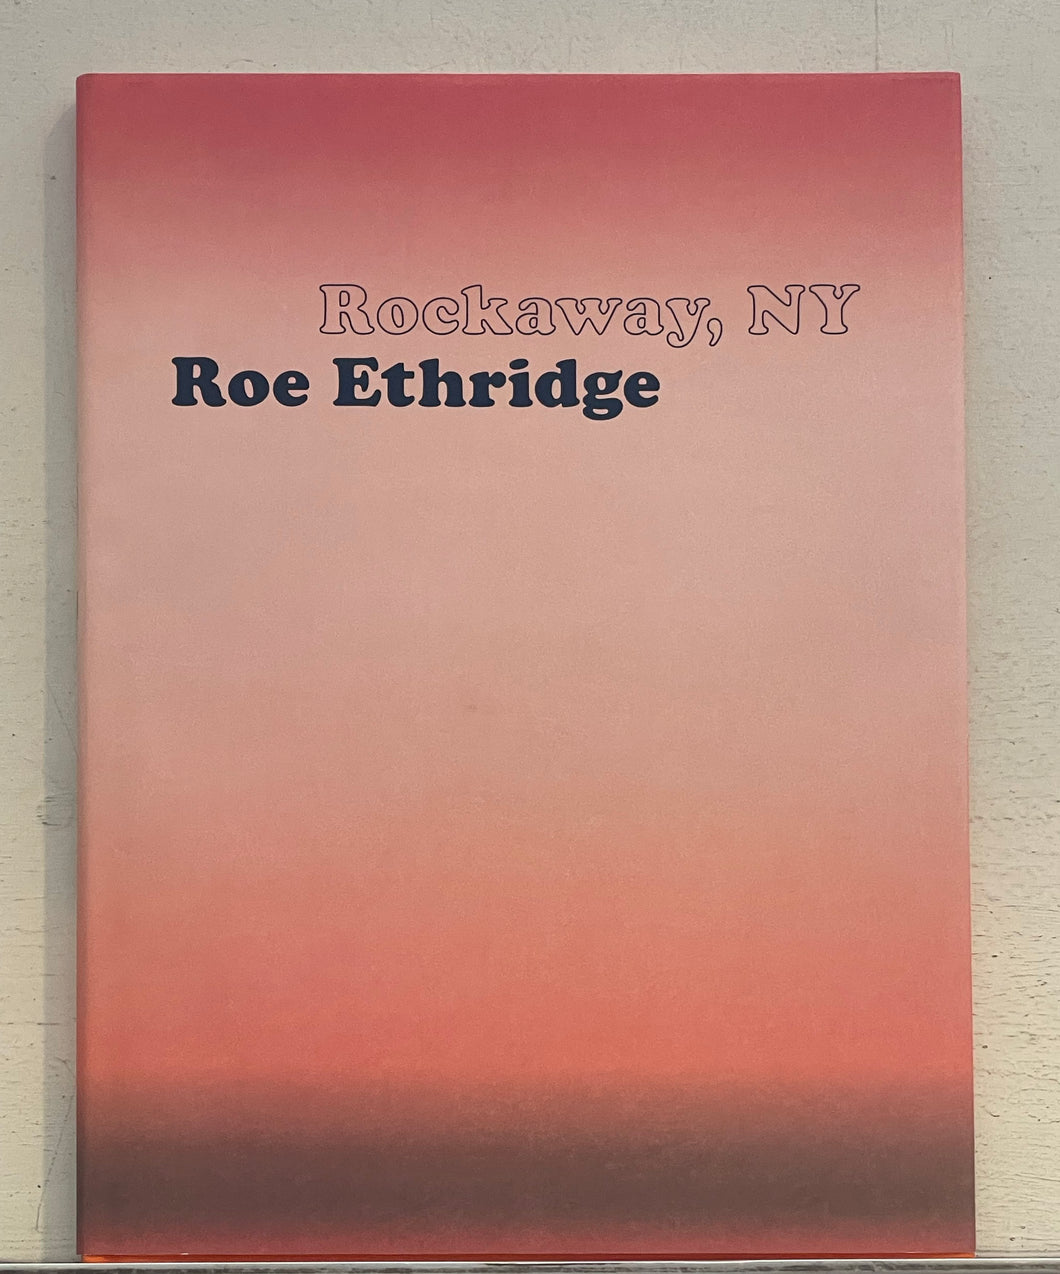 Rockaway, NY Roe Etheridge